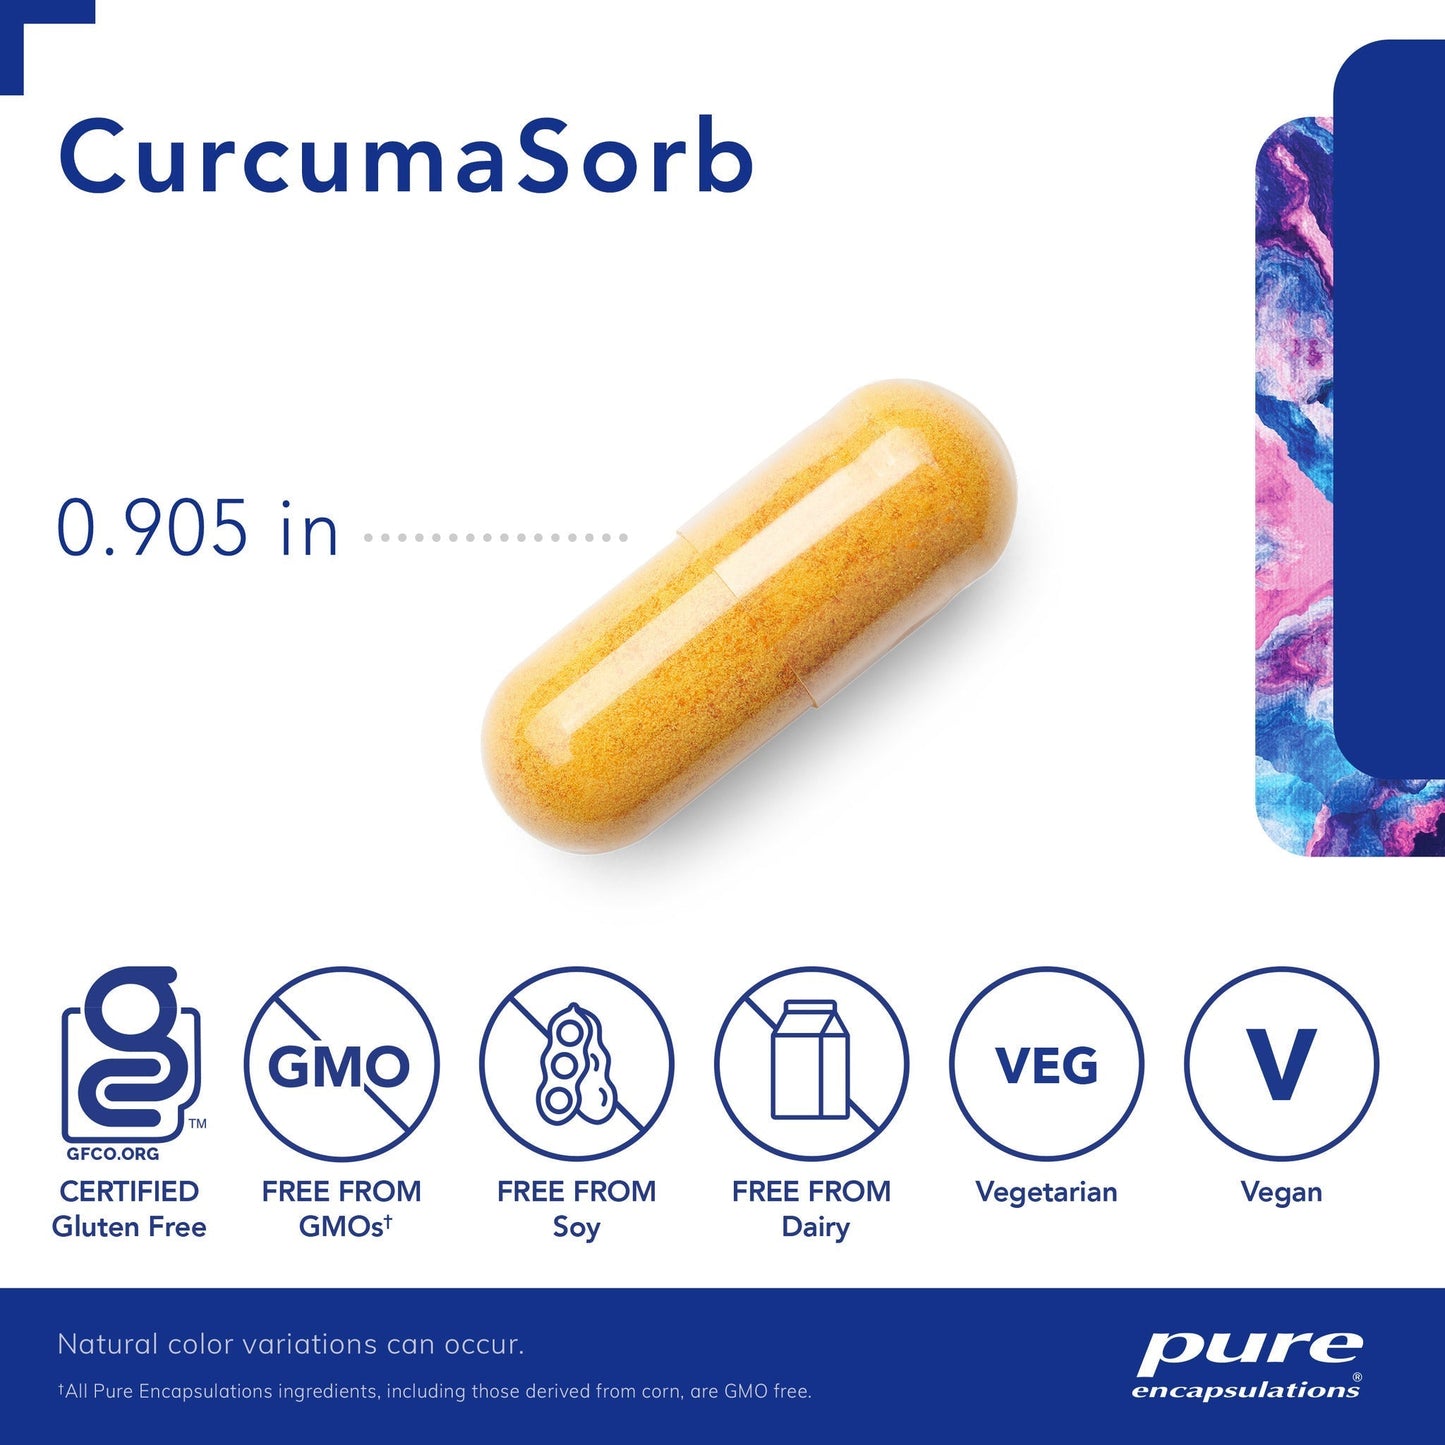 CurcumaSorb